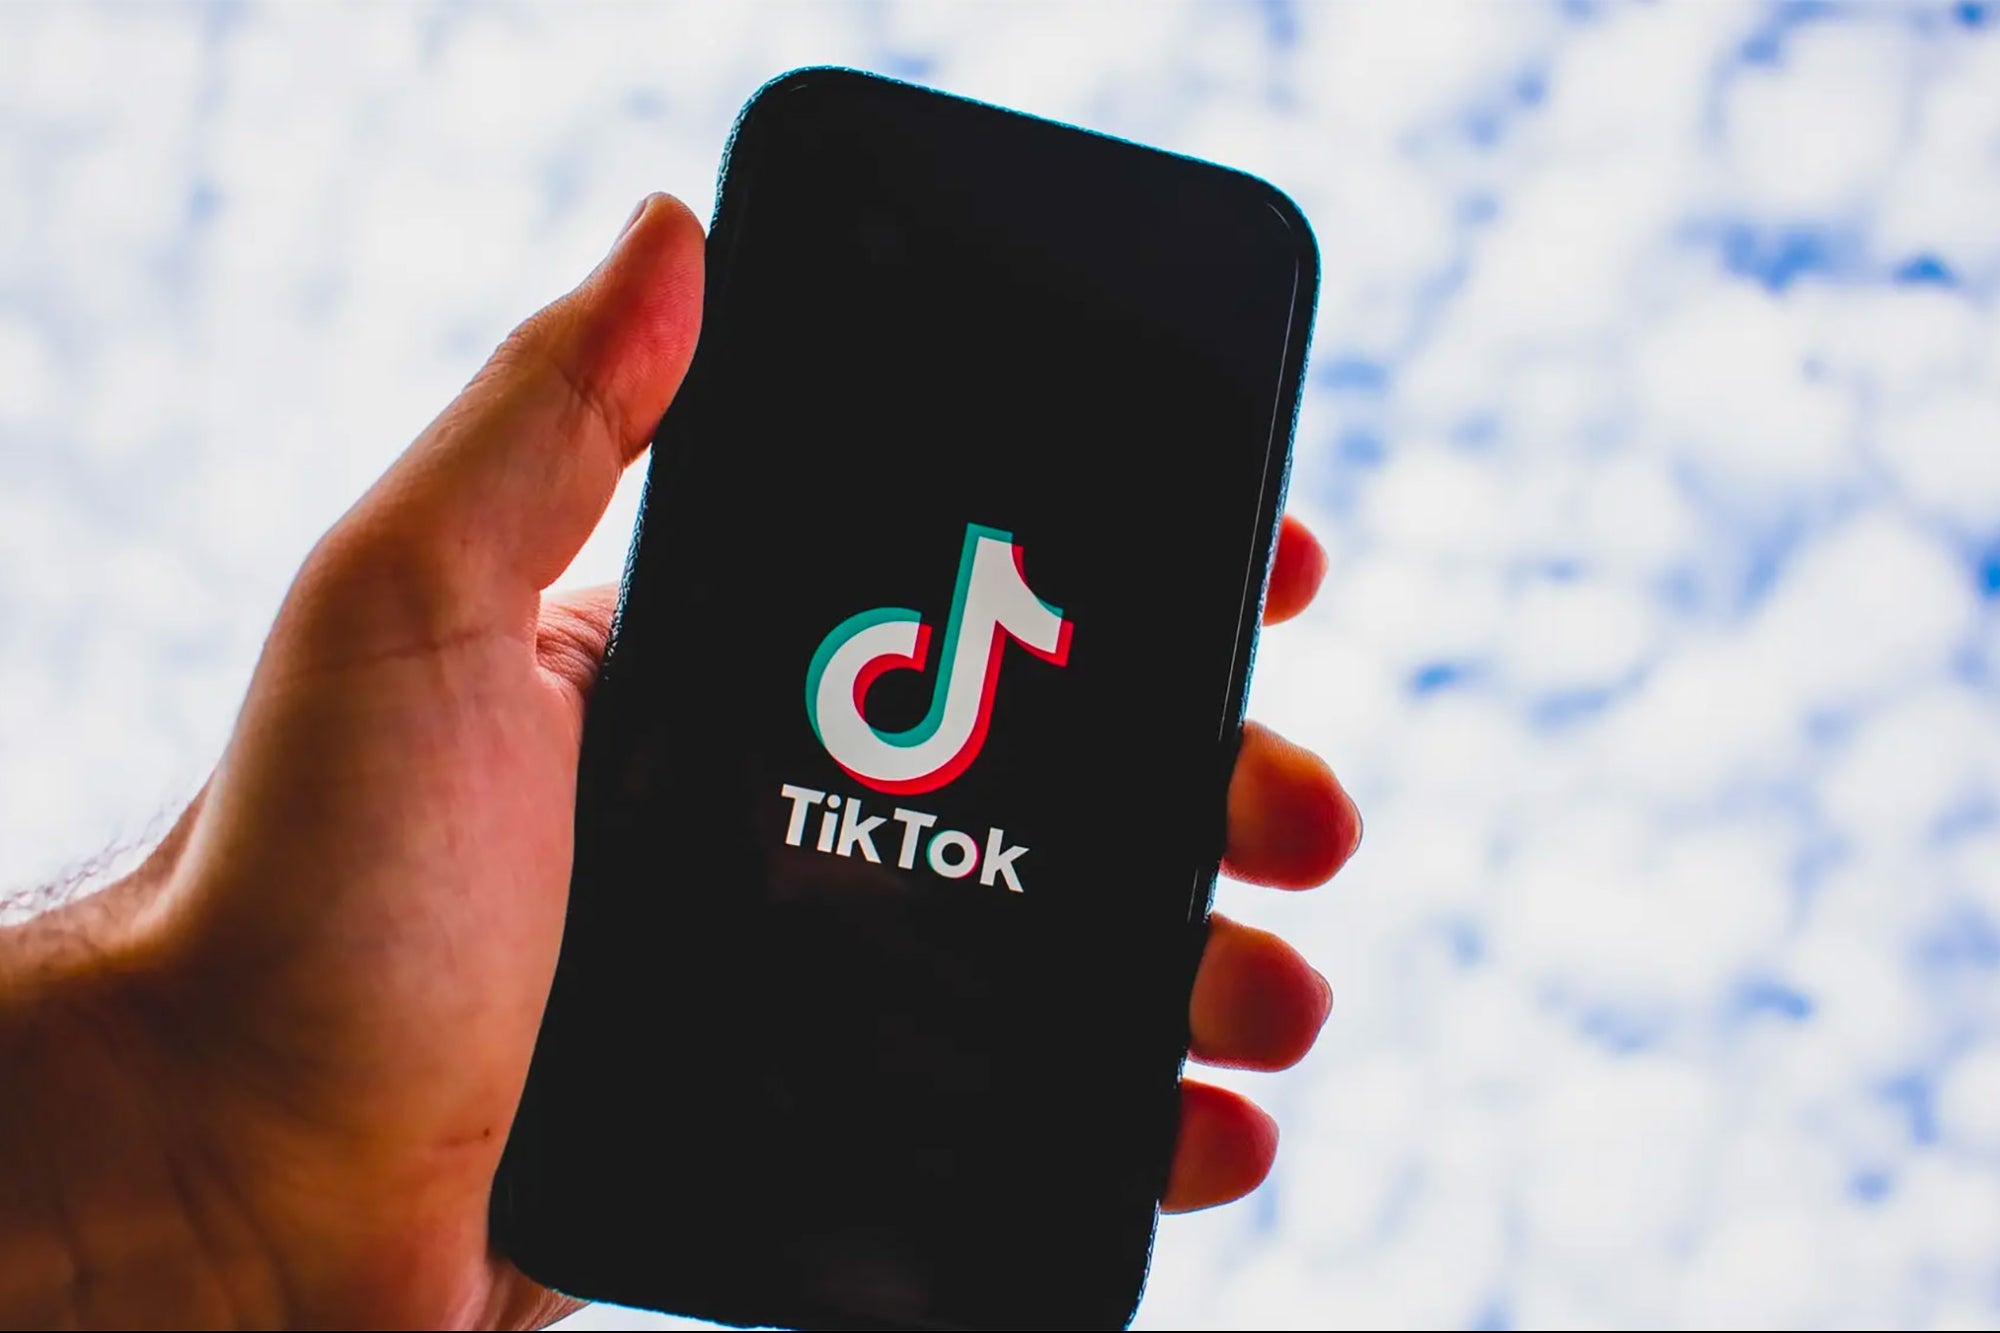 Remove ban from TikTok